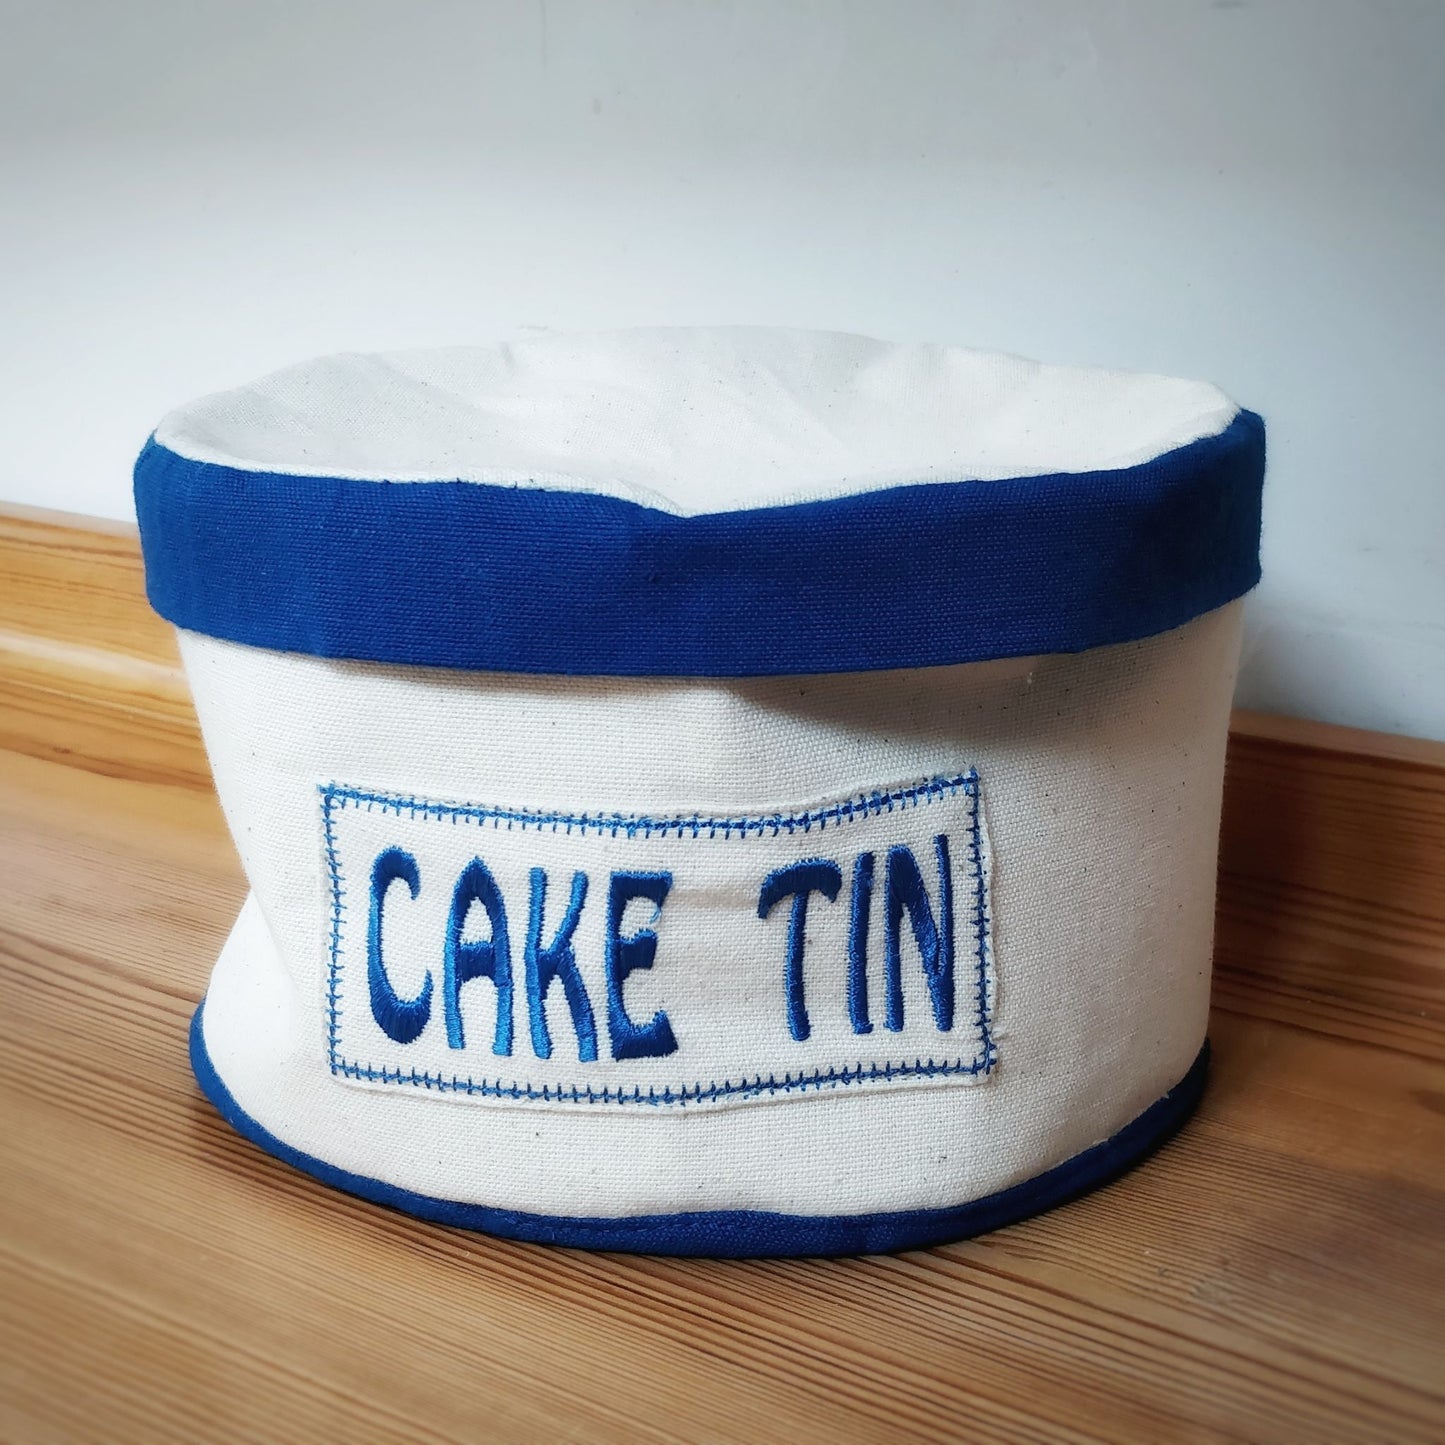 Cupcake Set in Fair Trade Cotton - cake tin